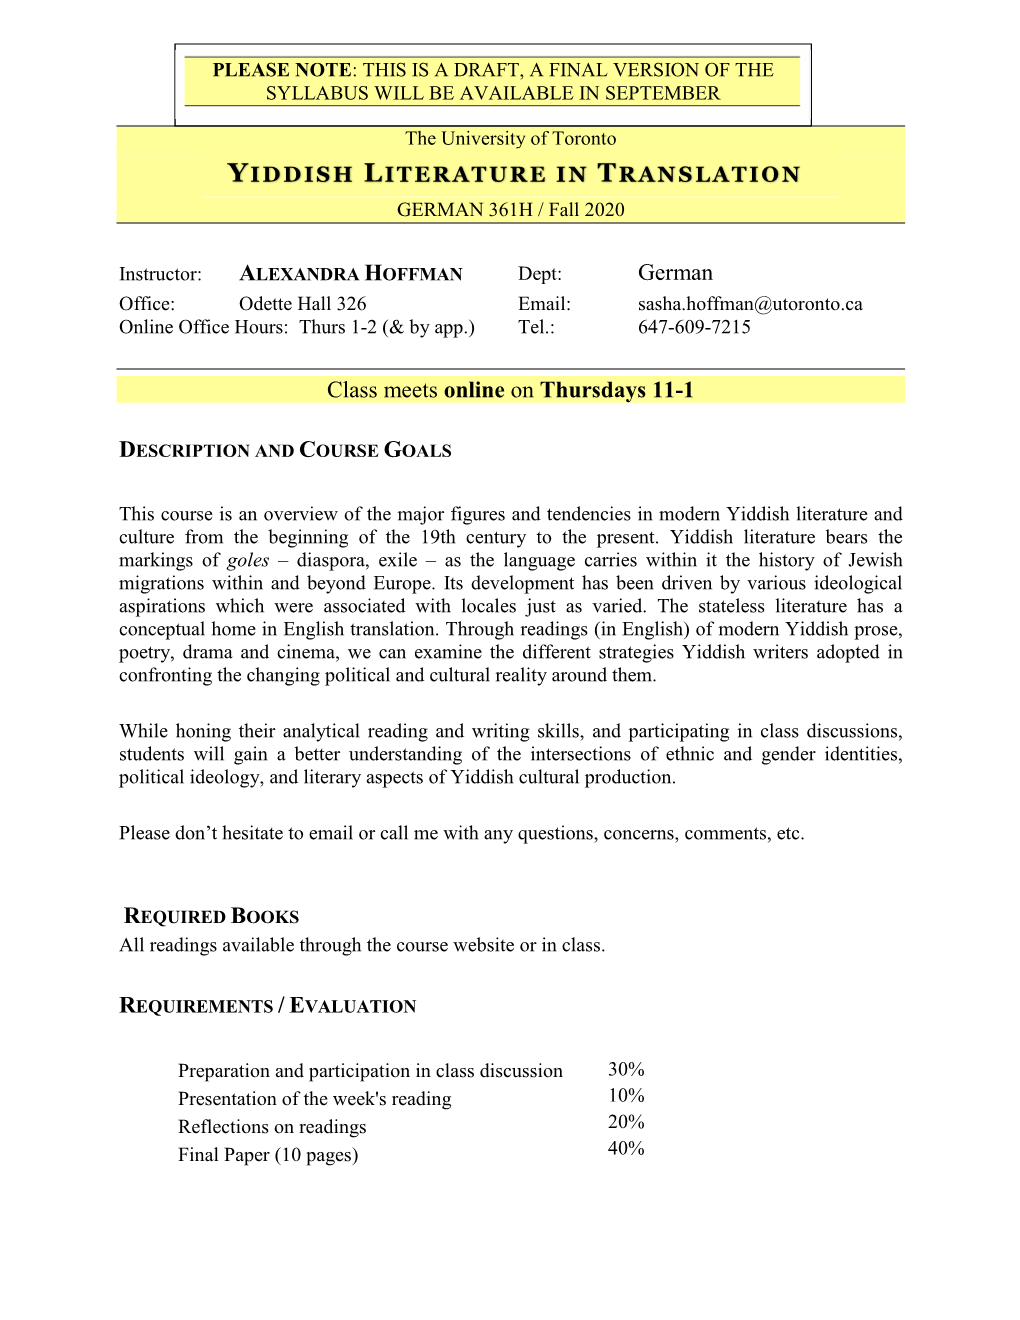 YIDDISH LITERATURE in TRANSLATION GERMAN 361H / Fall 2020